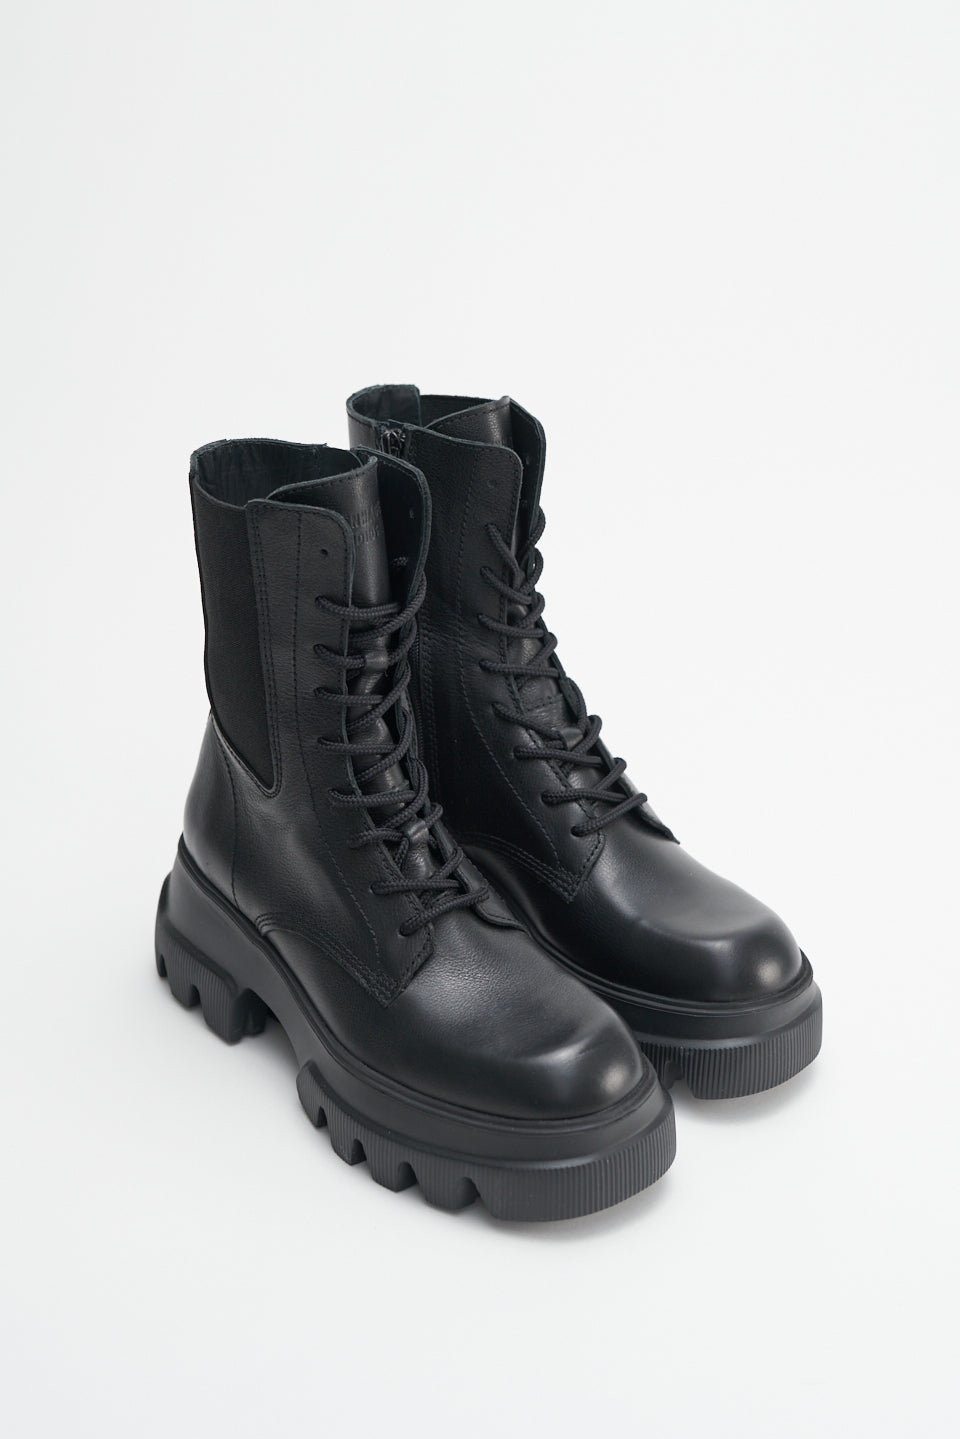 Vitello Black Combat Boots CPH169BLACK - 2